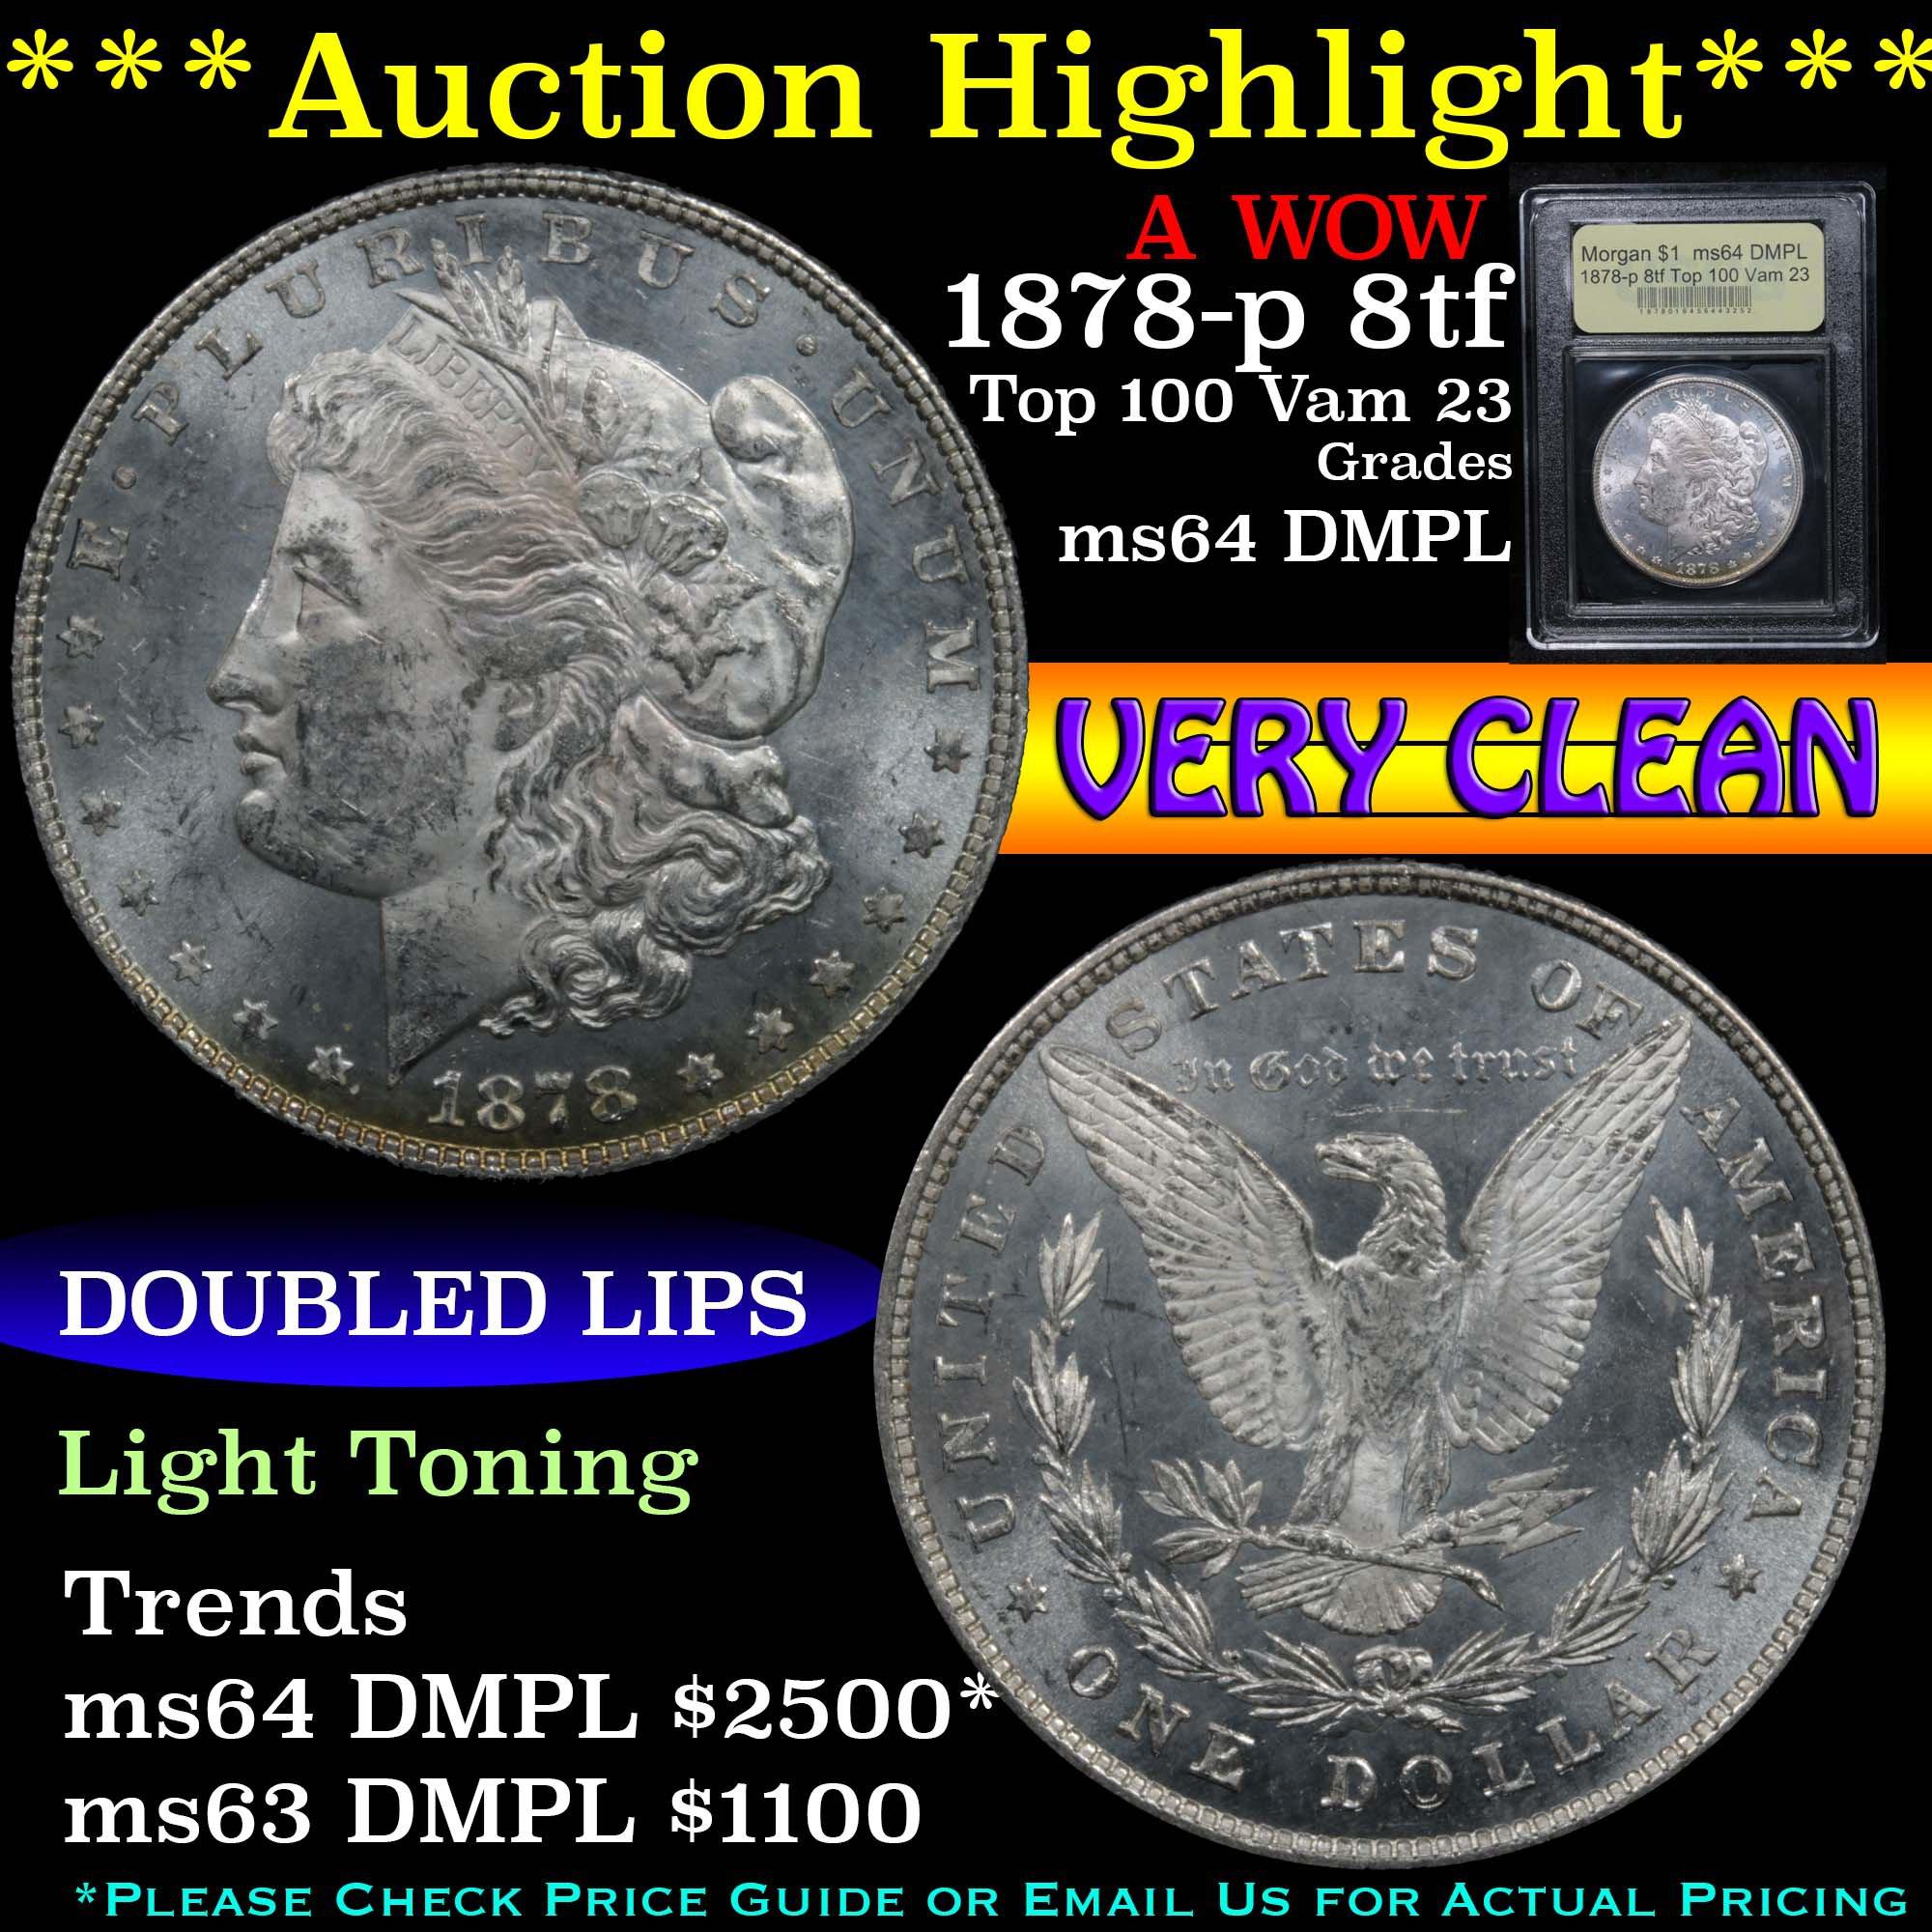 ***Auction Highlight*** 1878-p 8tf Top 100 Vam 23 Morgan $1 Graded Choice Unc DMPL USCG (fc)